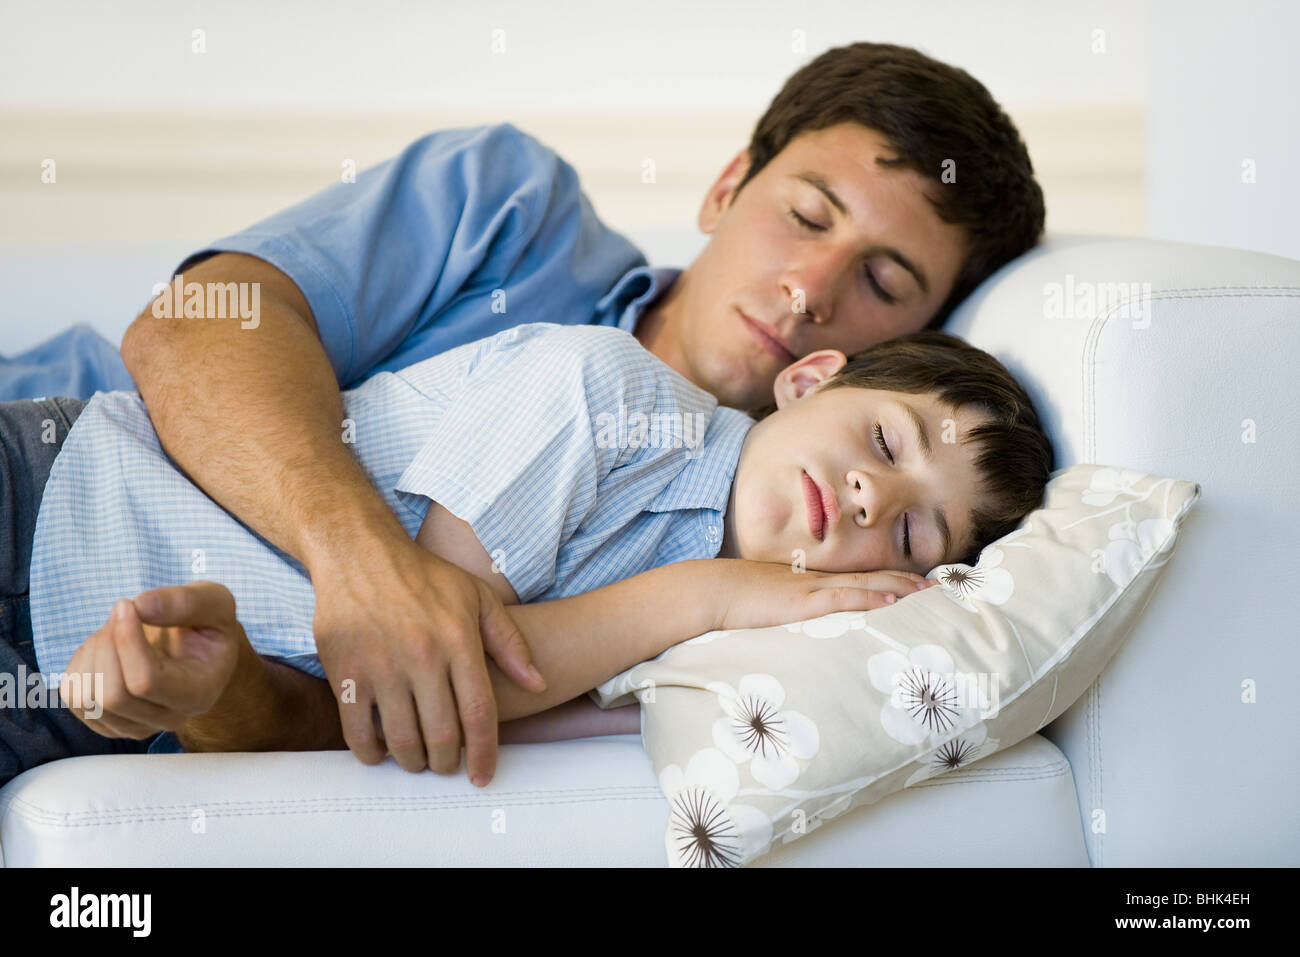 2 Boys Sleeping Together